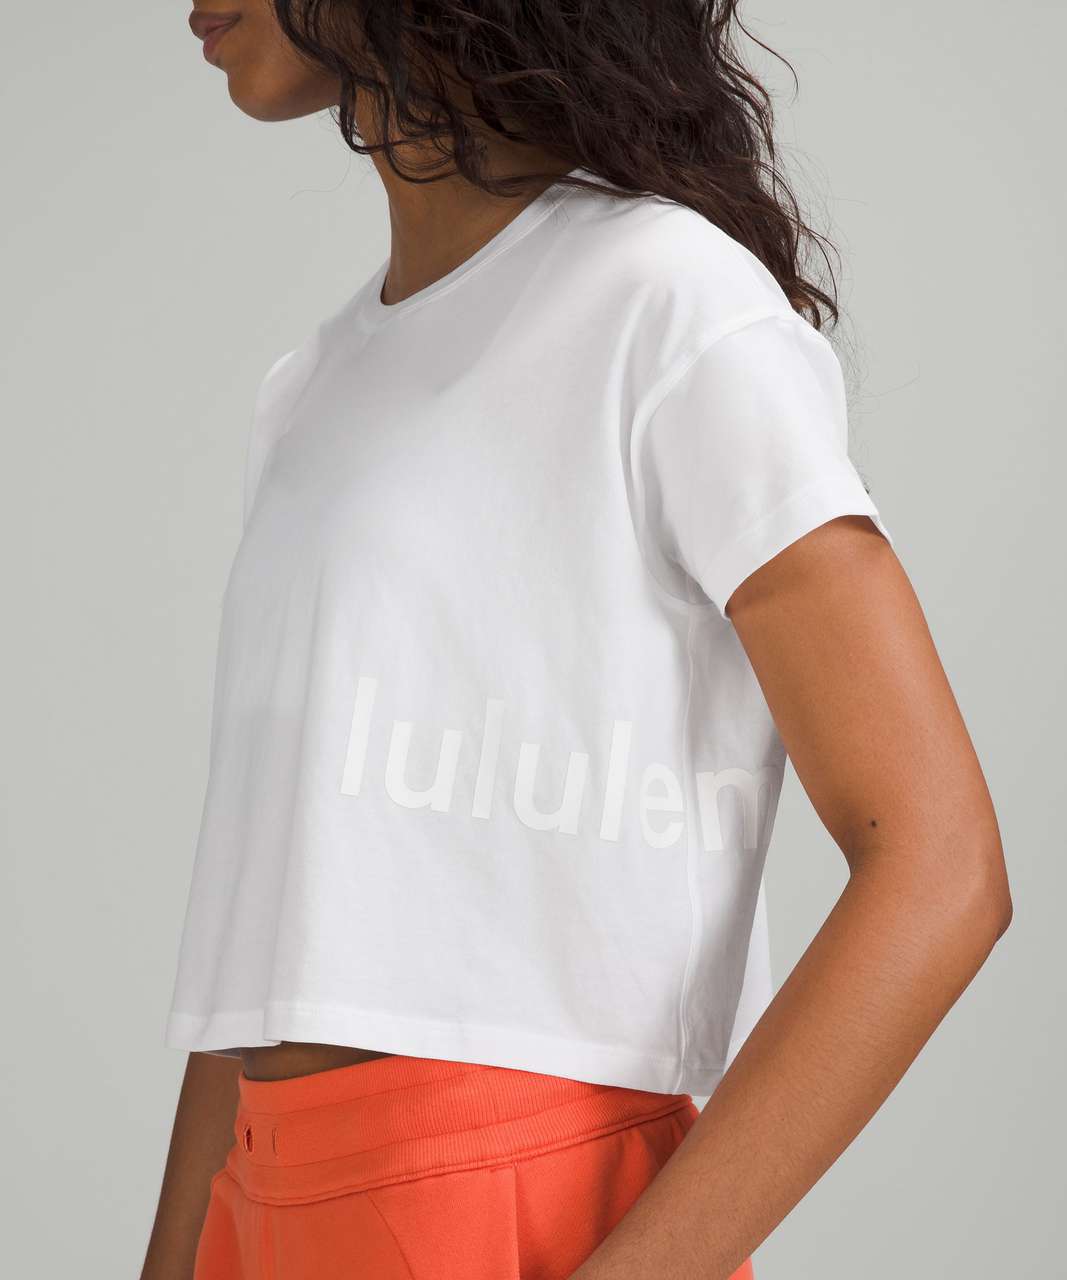 Lululemon Cates T-Shirt *Graphic - White